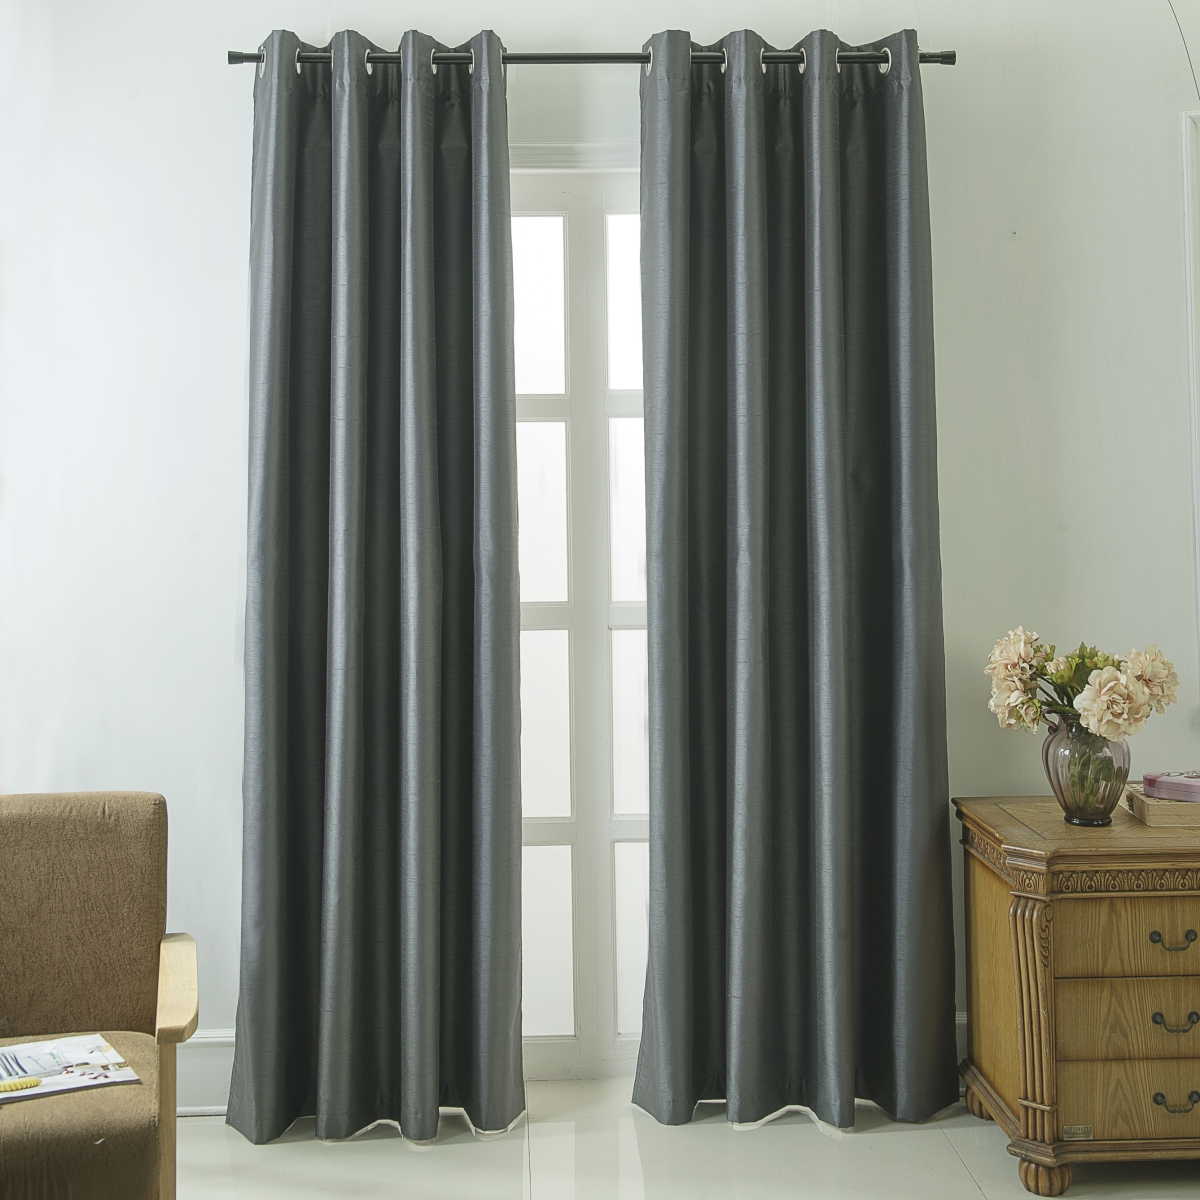 Pns18517 Shelton Faux Silk Room Darkening Grommet Single Curtain Panel In Charcoal - 54 X 84 In.